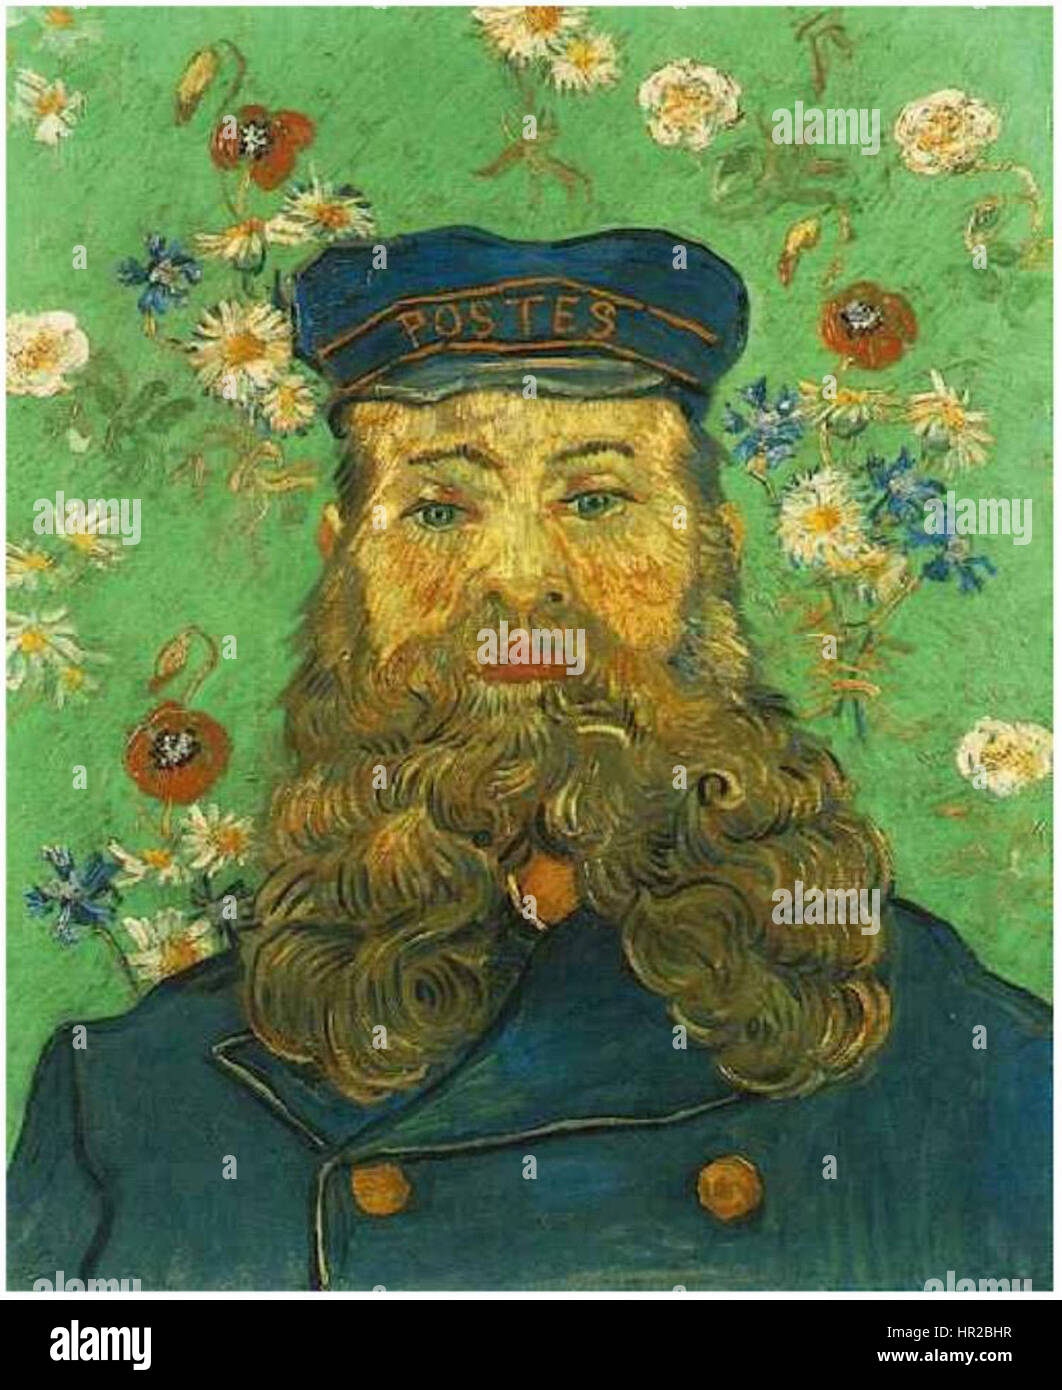 Retrato del cartero Joseph Roulin (1889) van Gogh Kroller Foto de stock